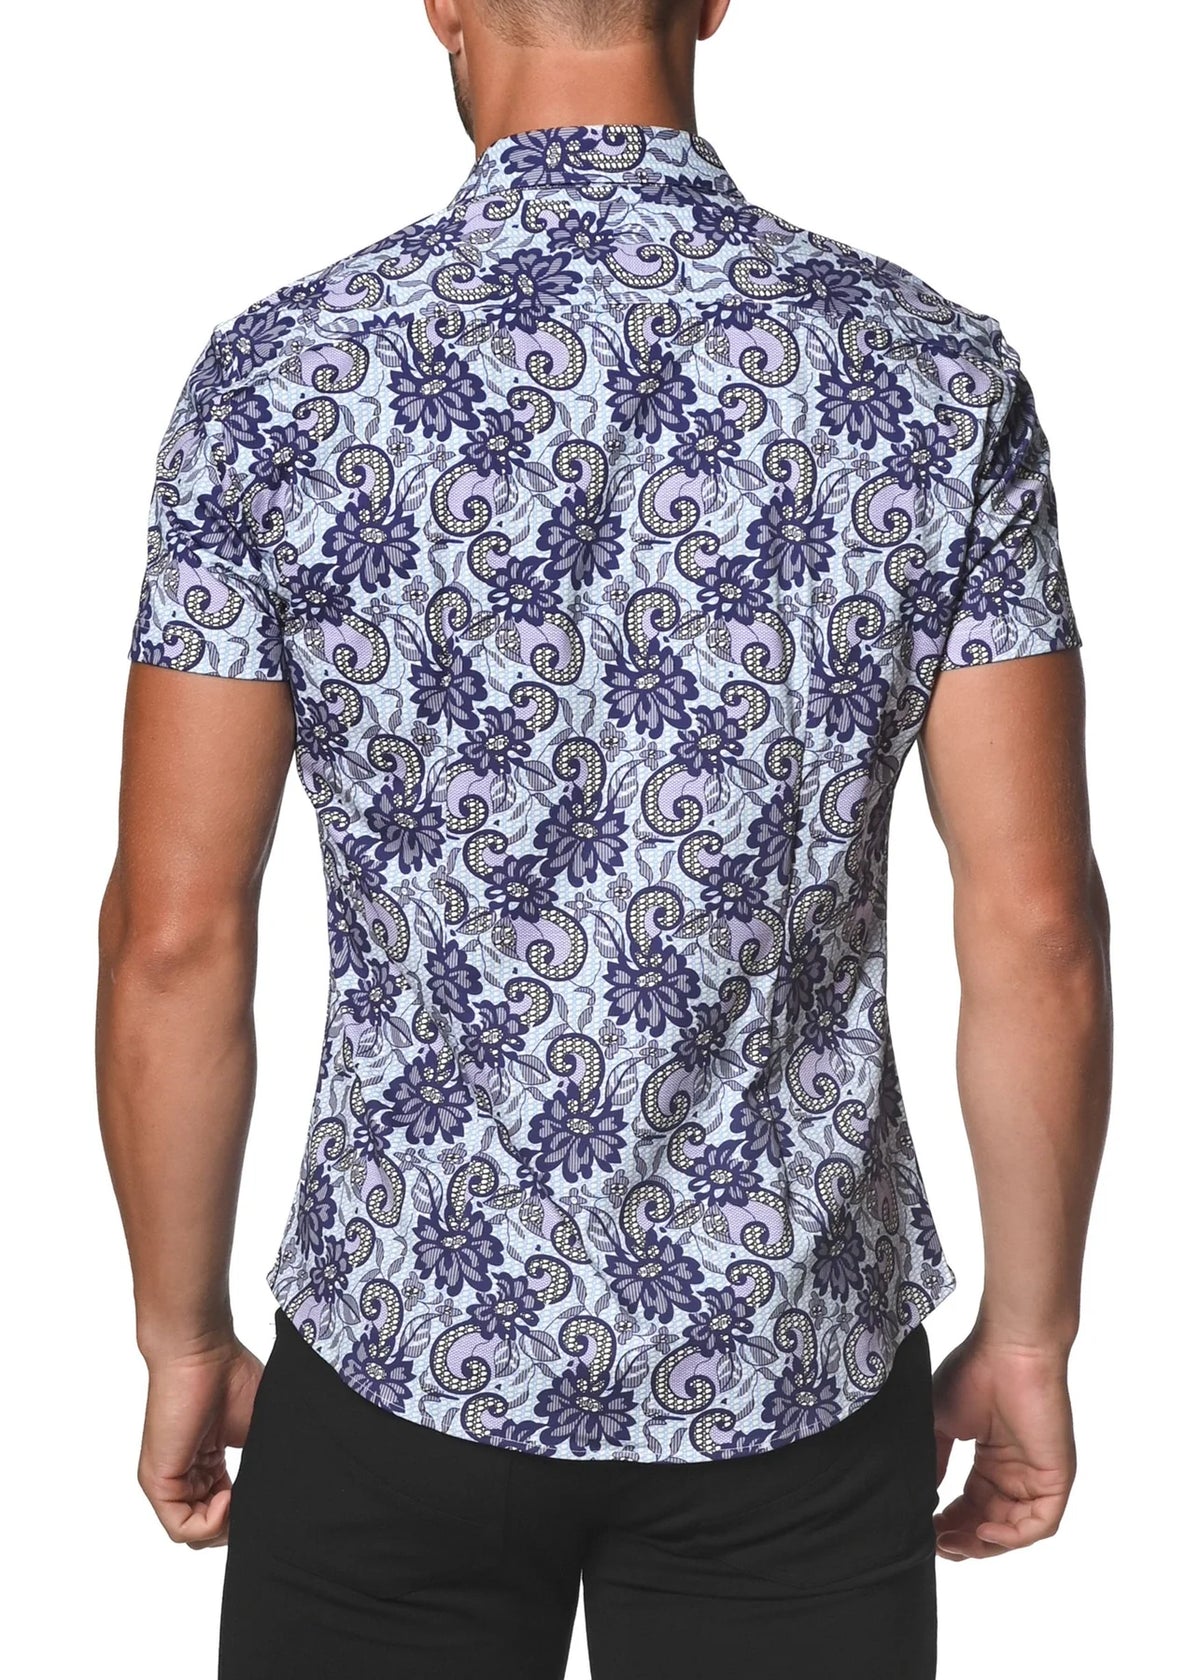 Stretch Jersey Knit Shirt (Blue Floral Lace)